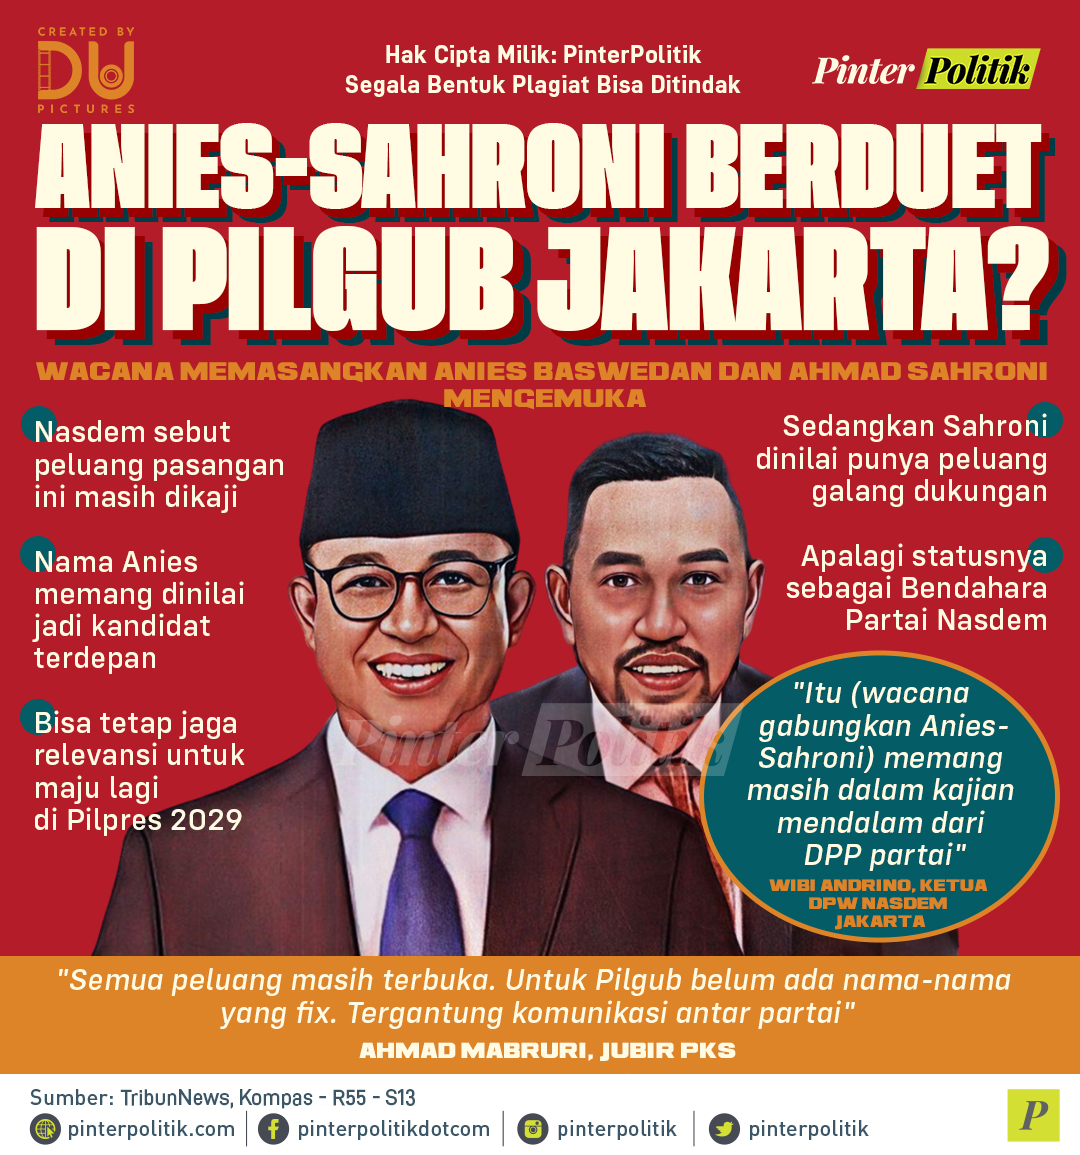 Menurut kalian gimana nih soal wacana duet Anies-Sahroni ini? Share pendapat kalian di kolom komentar ya!

#aniesbaswedan #ahmadsahroni #pilgubjakarta #infografis #pinterpolitik #politikindonesia #beritapolitik